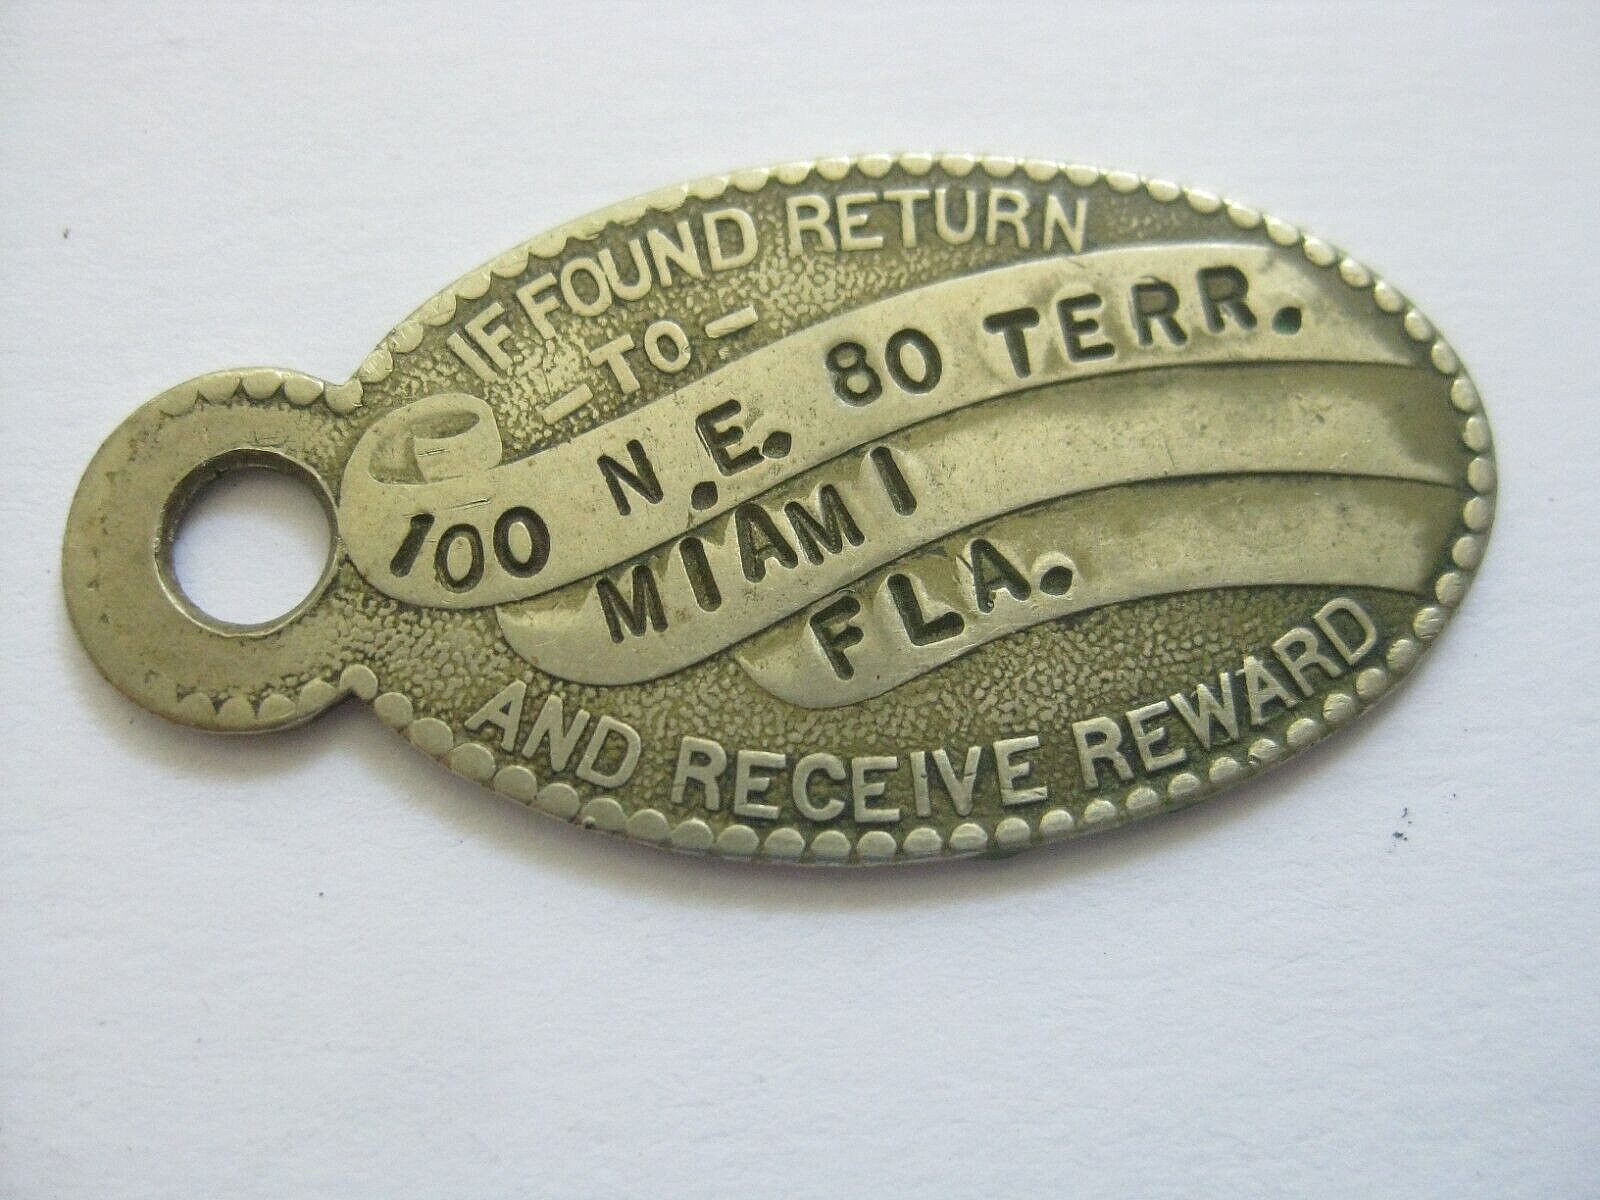 Vintage Keychain Fob If Found Return To And Receive Reward Antique Miami Florida